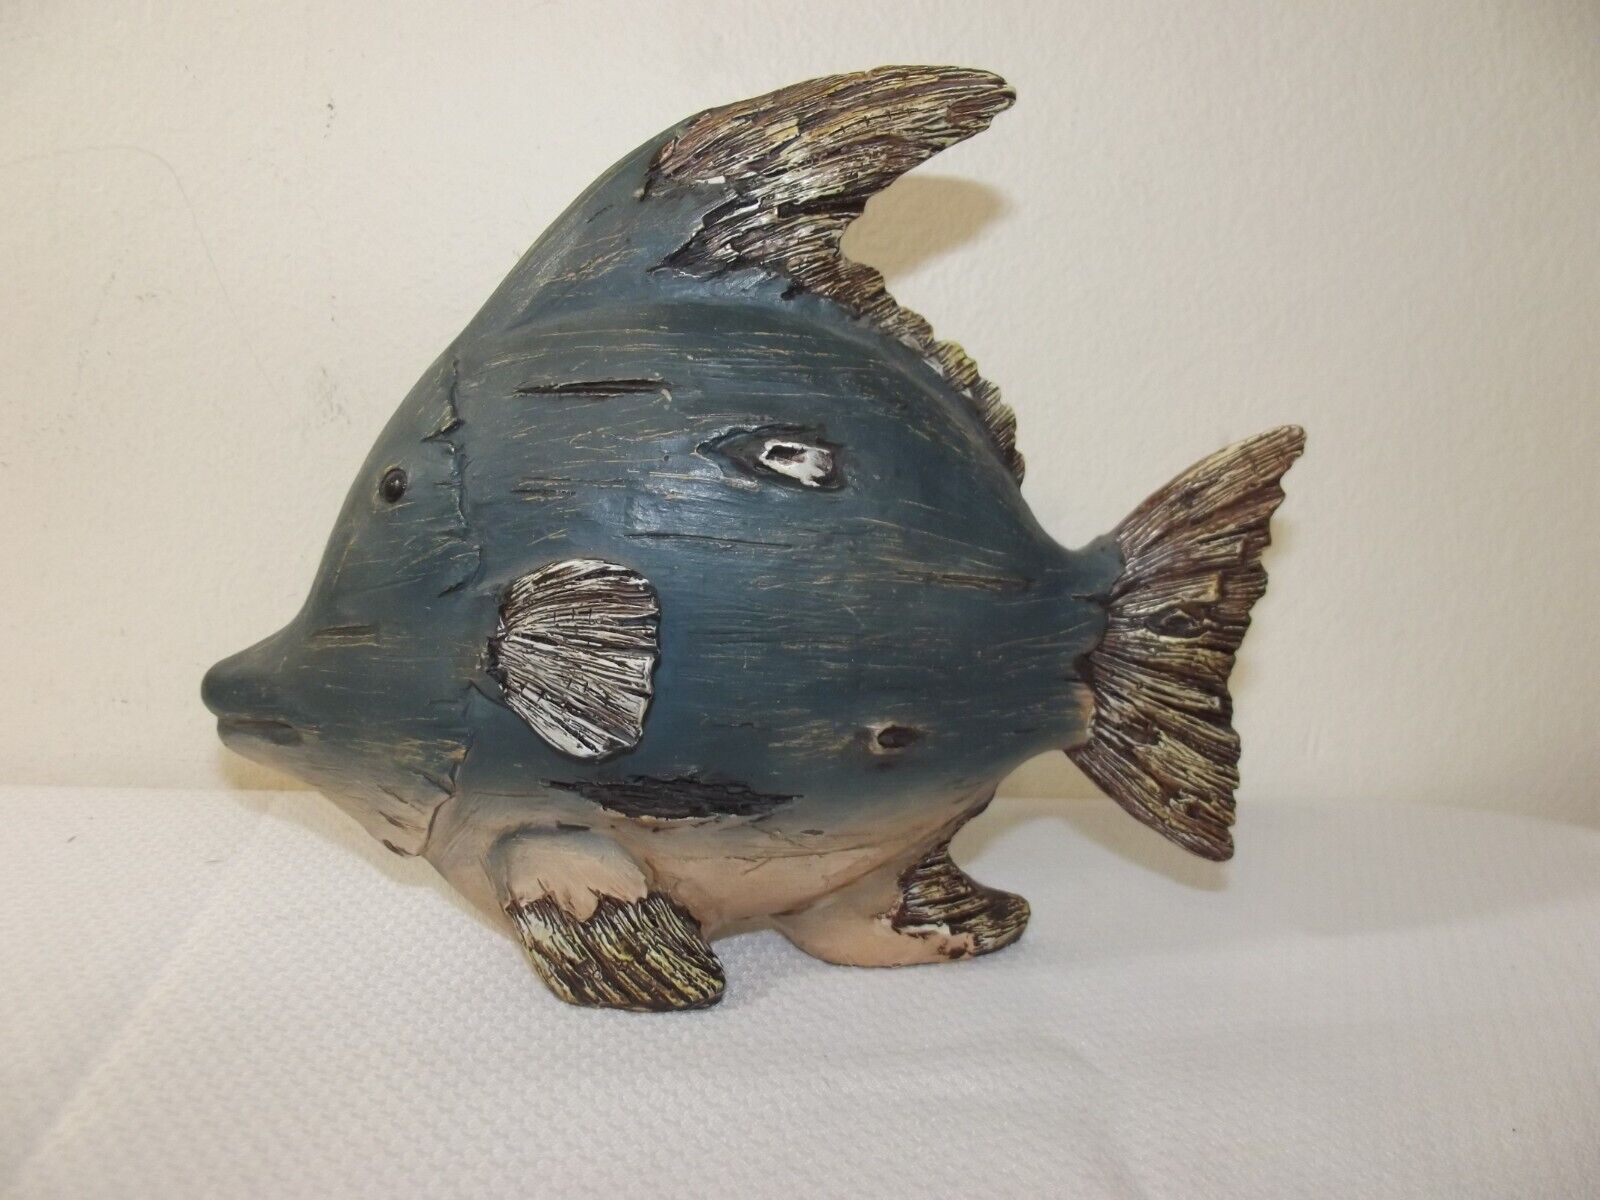 Hobby Lobby Nautical BLUE TROPICAL FISH Decor Resin Statue 7x8 Wood Look